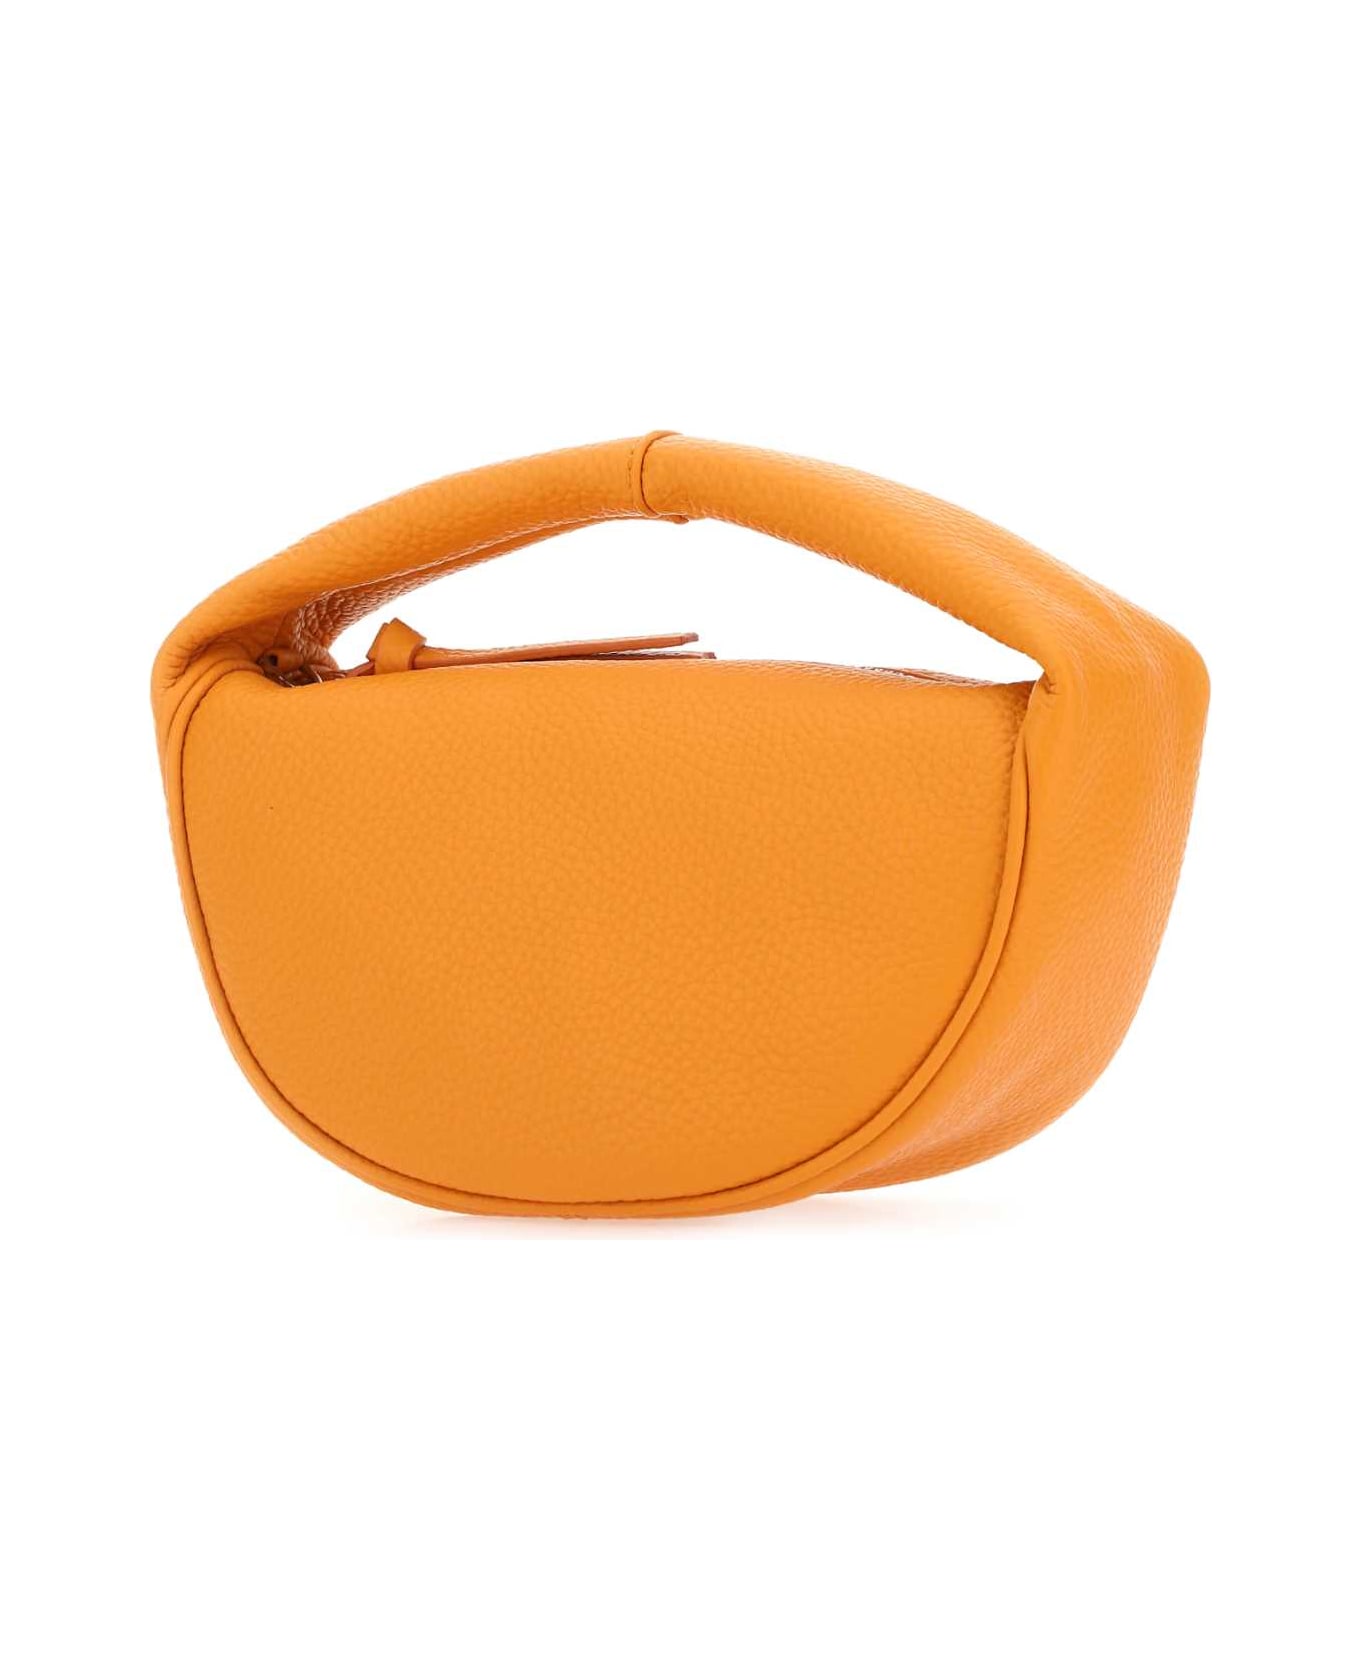 BY FAR Orange Leather Baby Cush Handbag - Orange